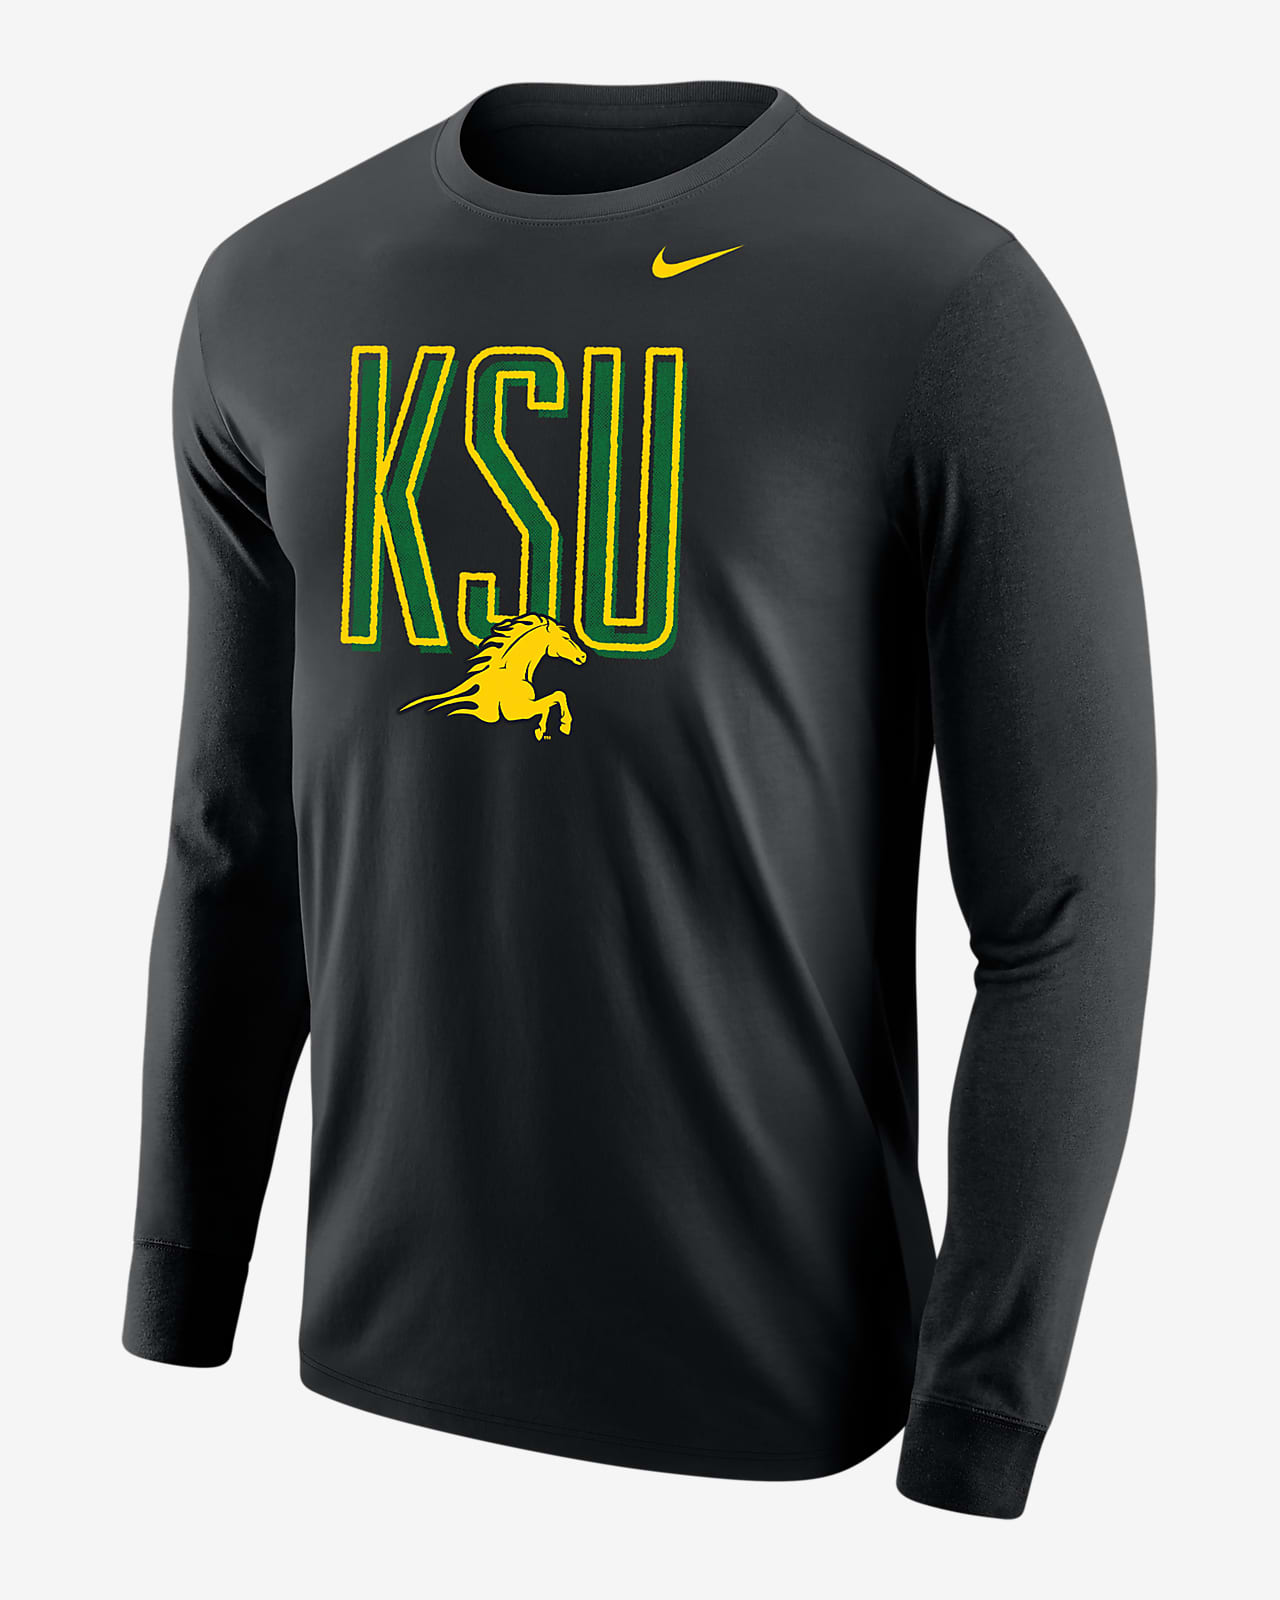 Nike College (Kentucky State) Men's Long-Sleeve T-Shirt